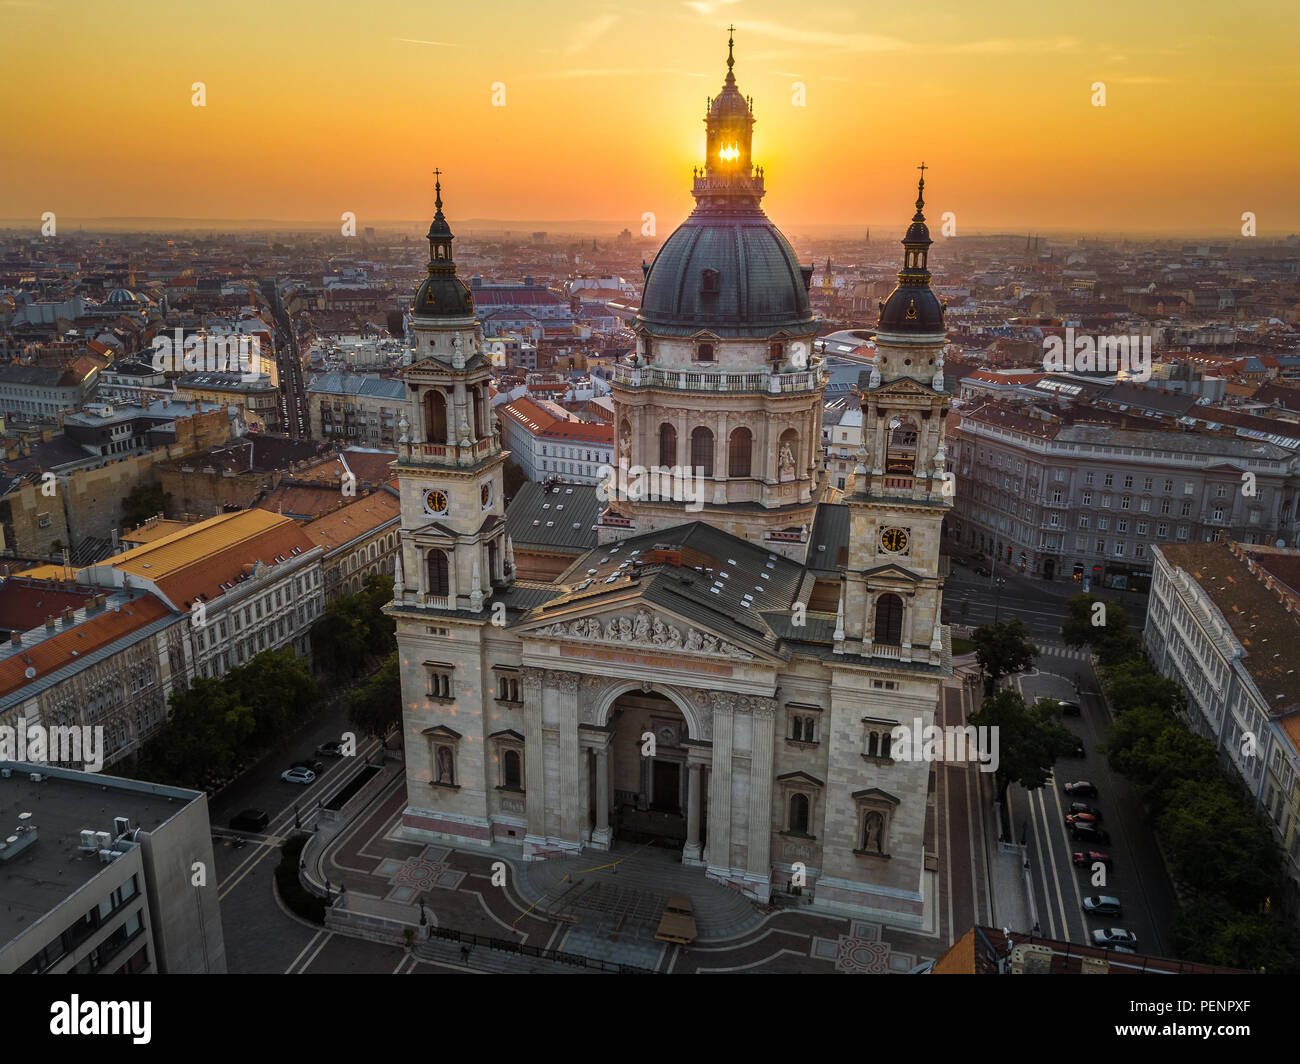 Budapest, Hungary - The rising sun shining through the tower of the beautiful St.Stephen's Basilica (Szent Istvan Bazilika) at sunrise on an aerial sh Stock Photo